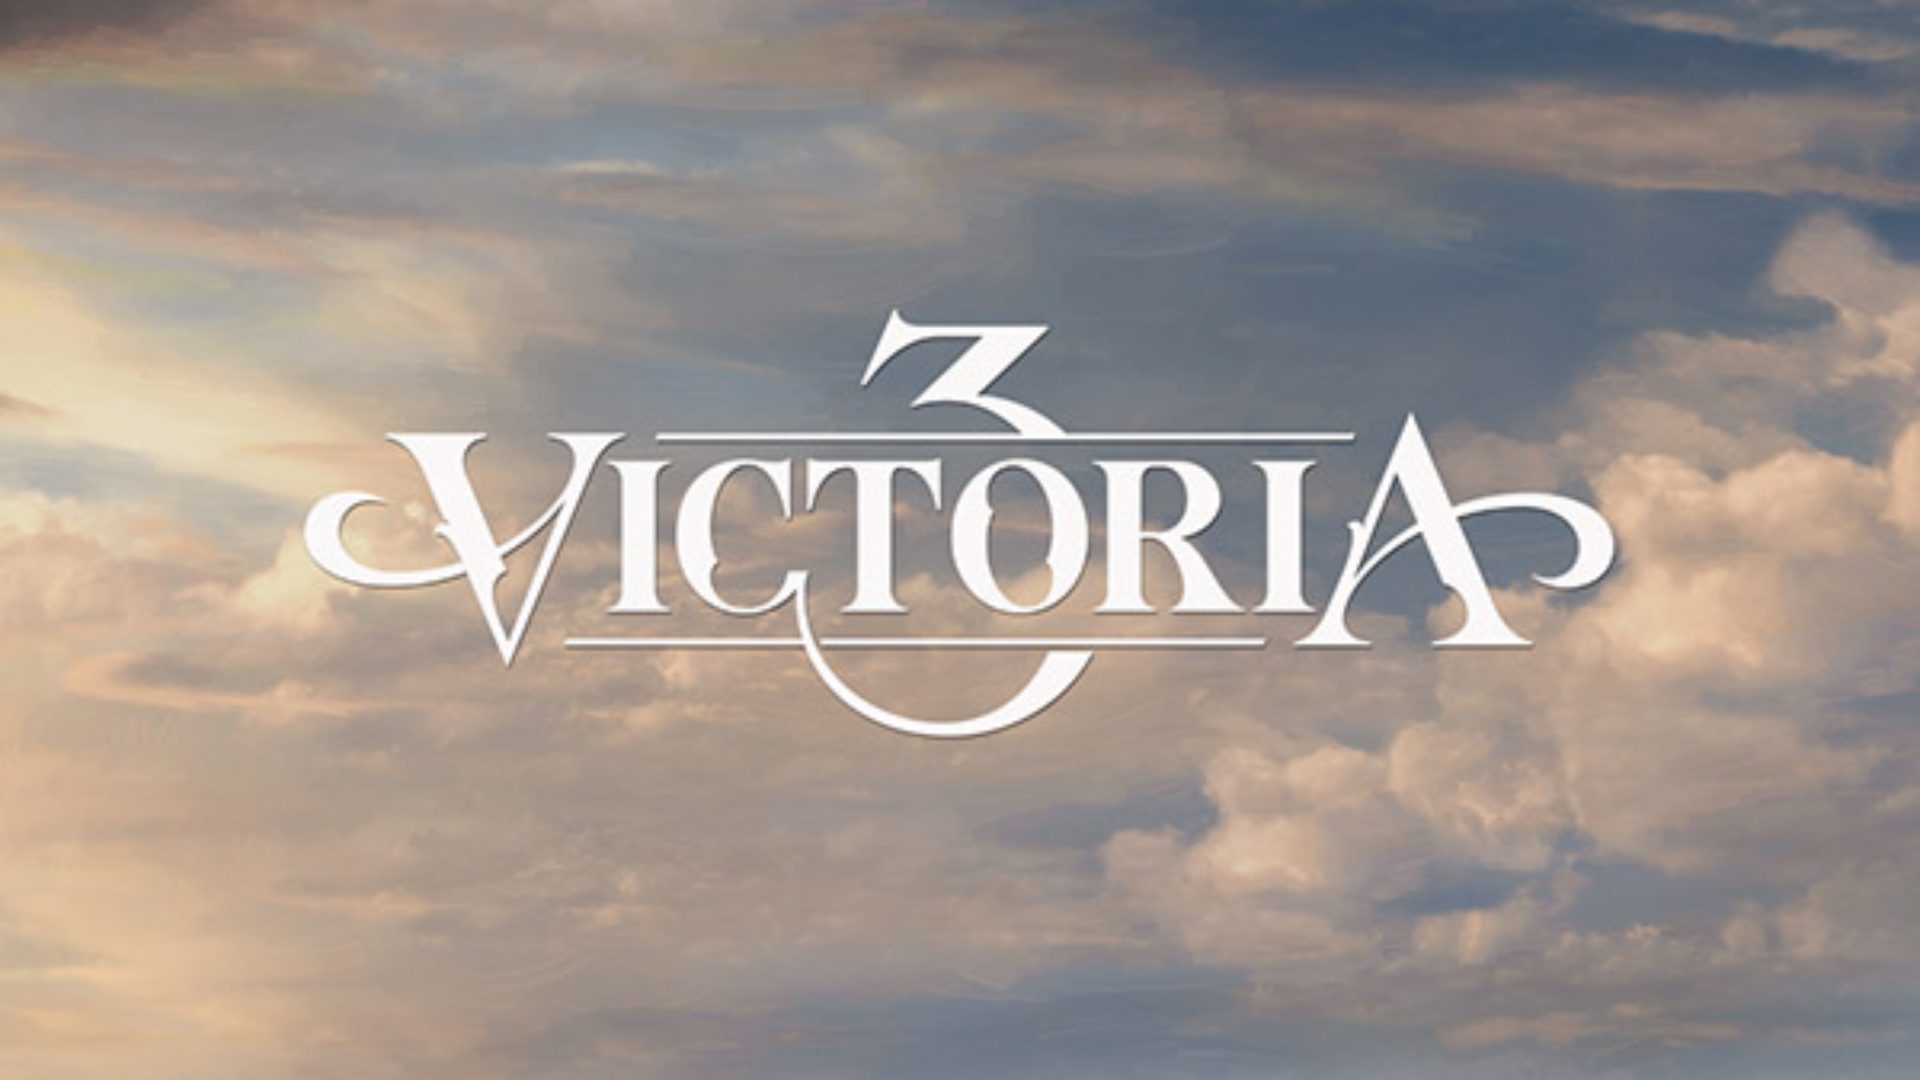 Victoria 3 تكسر حاجز النصف مليون نسخة مباعة